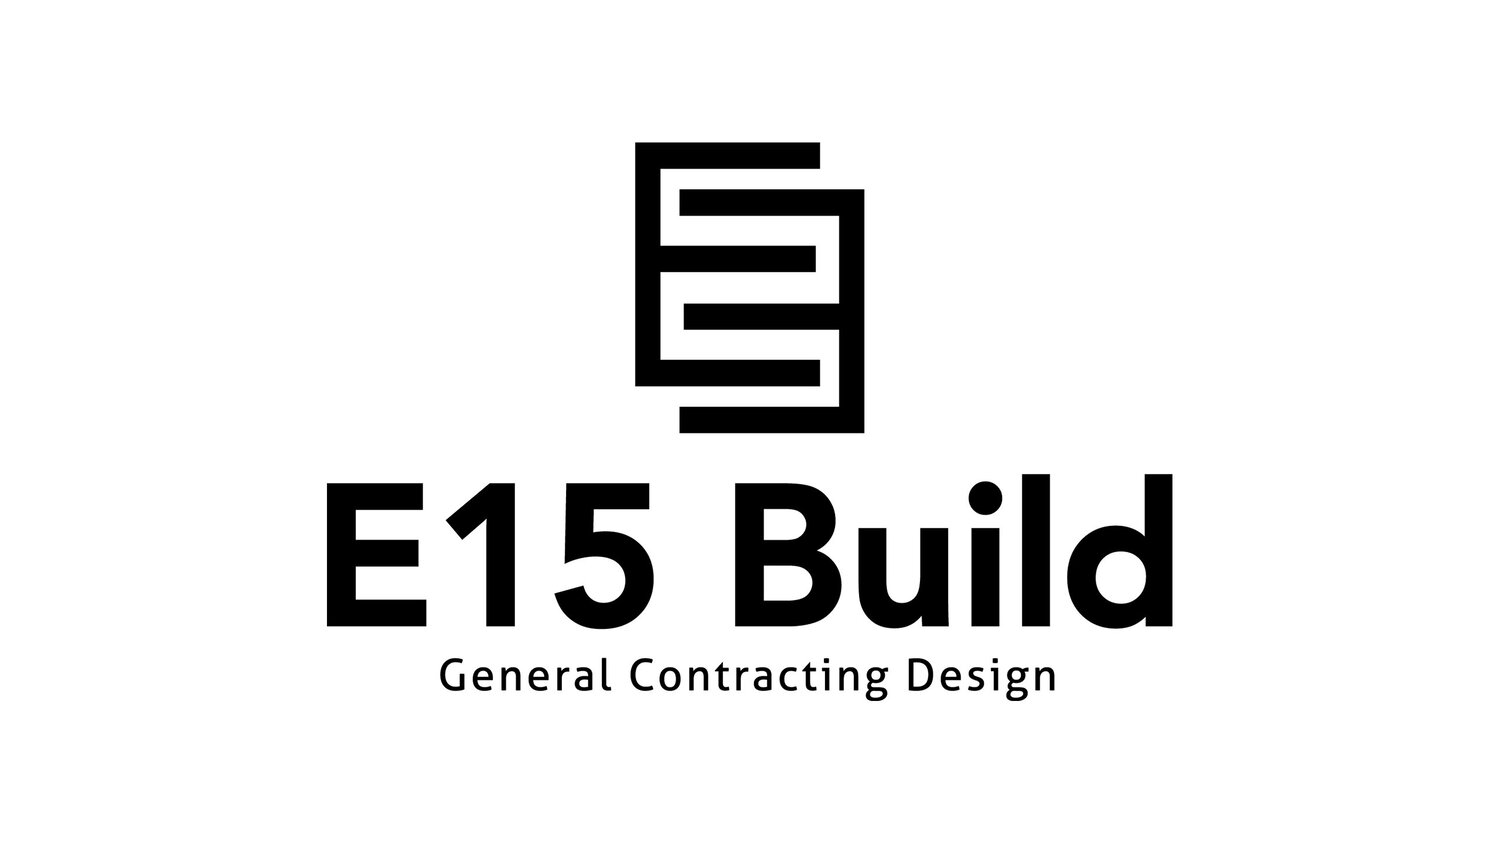 E15 Build Inc. General Contracting